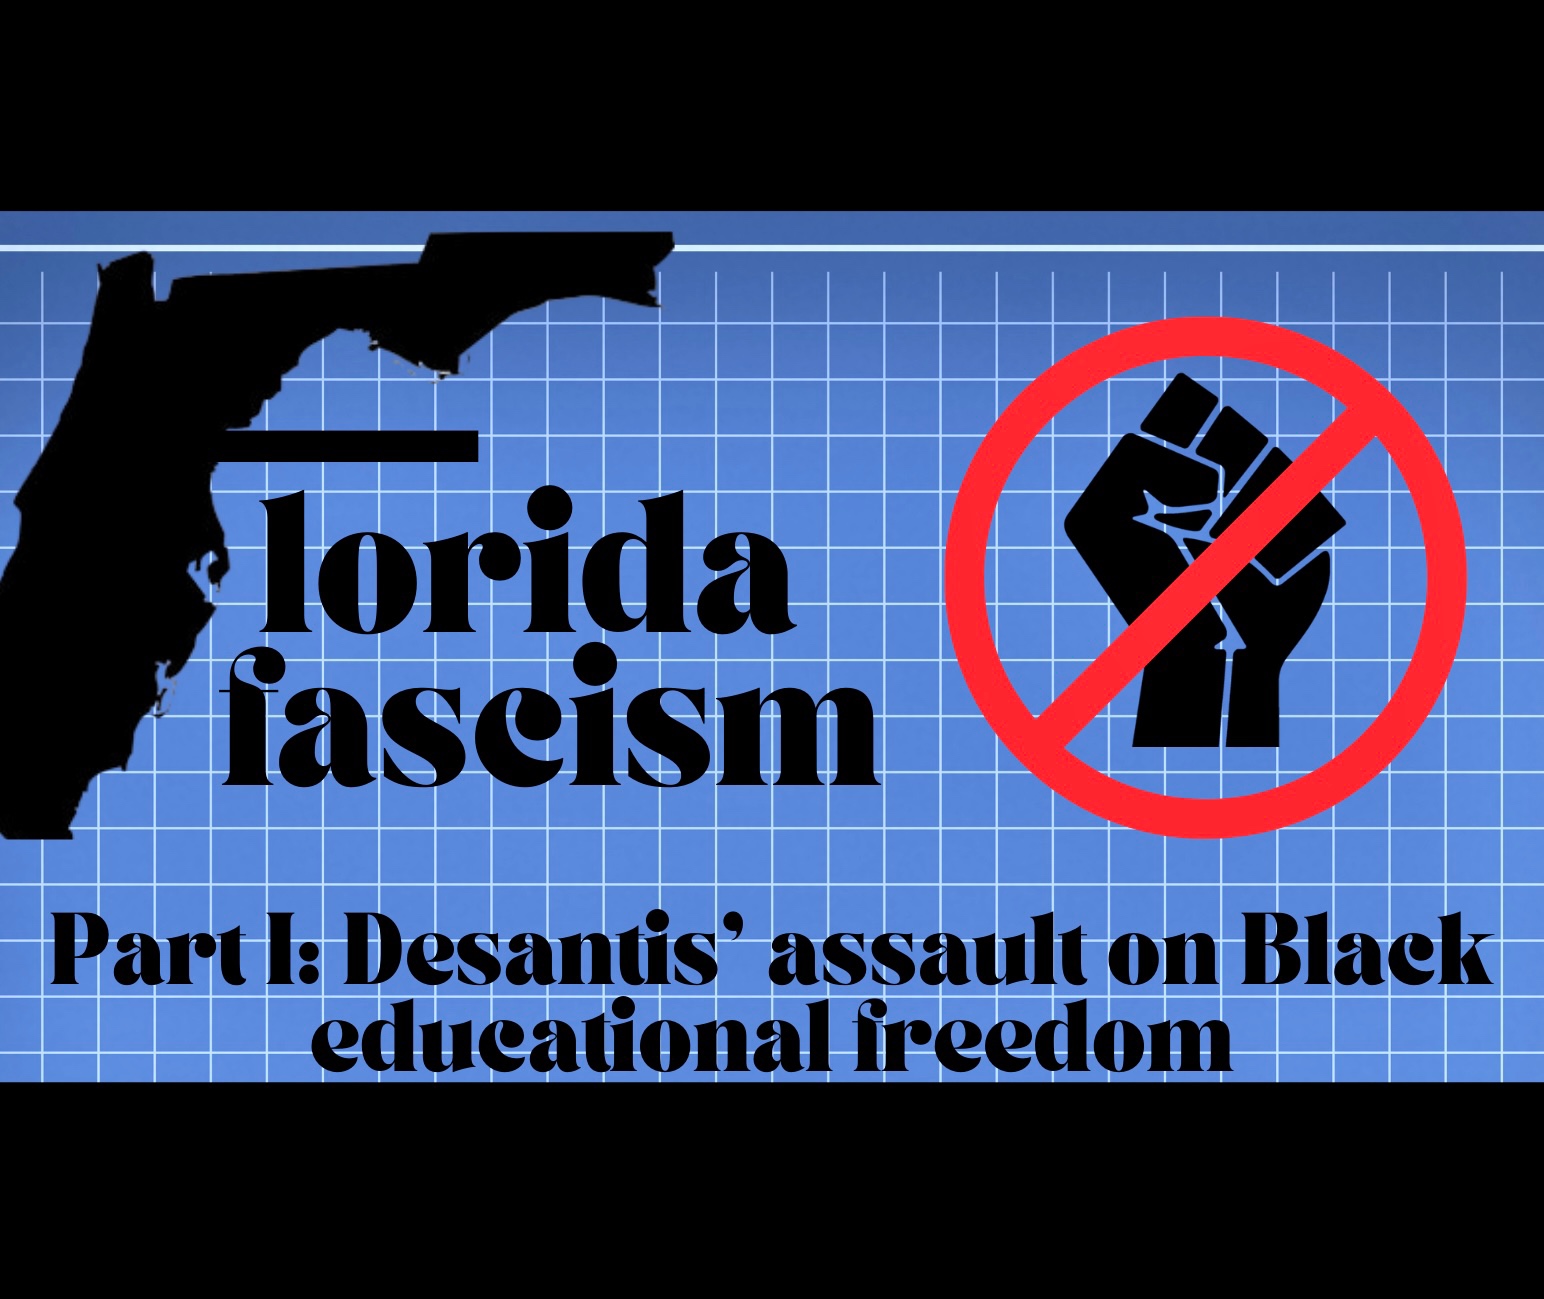 OPINION | Desantis reprehensible assault on Black educational freedom